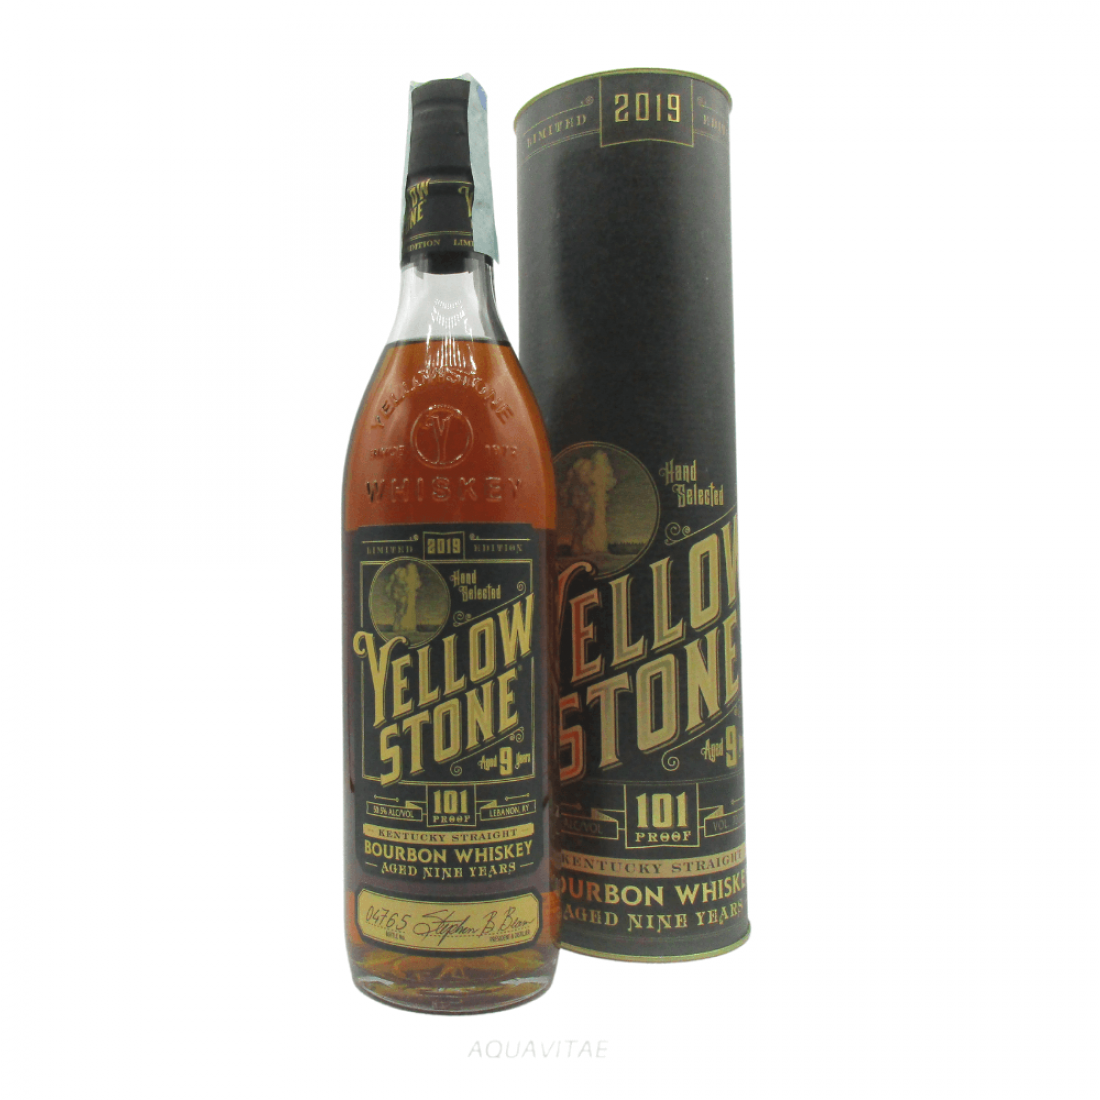 Whiskey Yellowstone Bourbon 101 Limited Edition 2019 Bourbon Whiskey